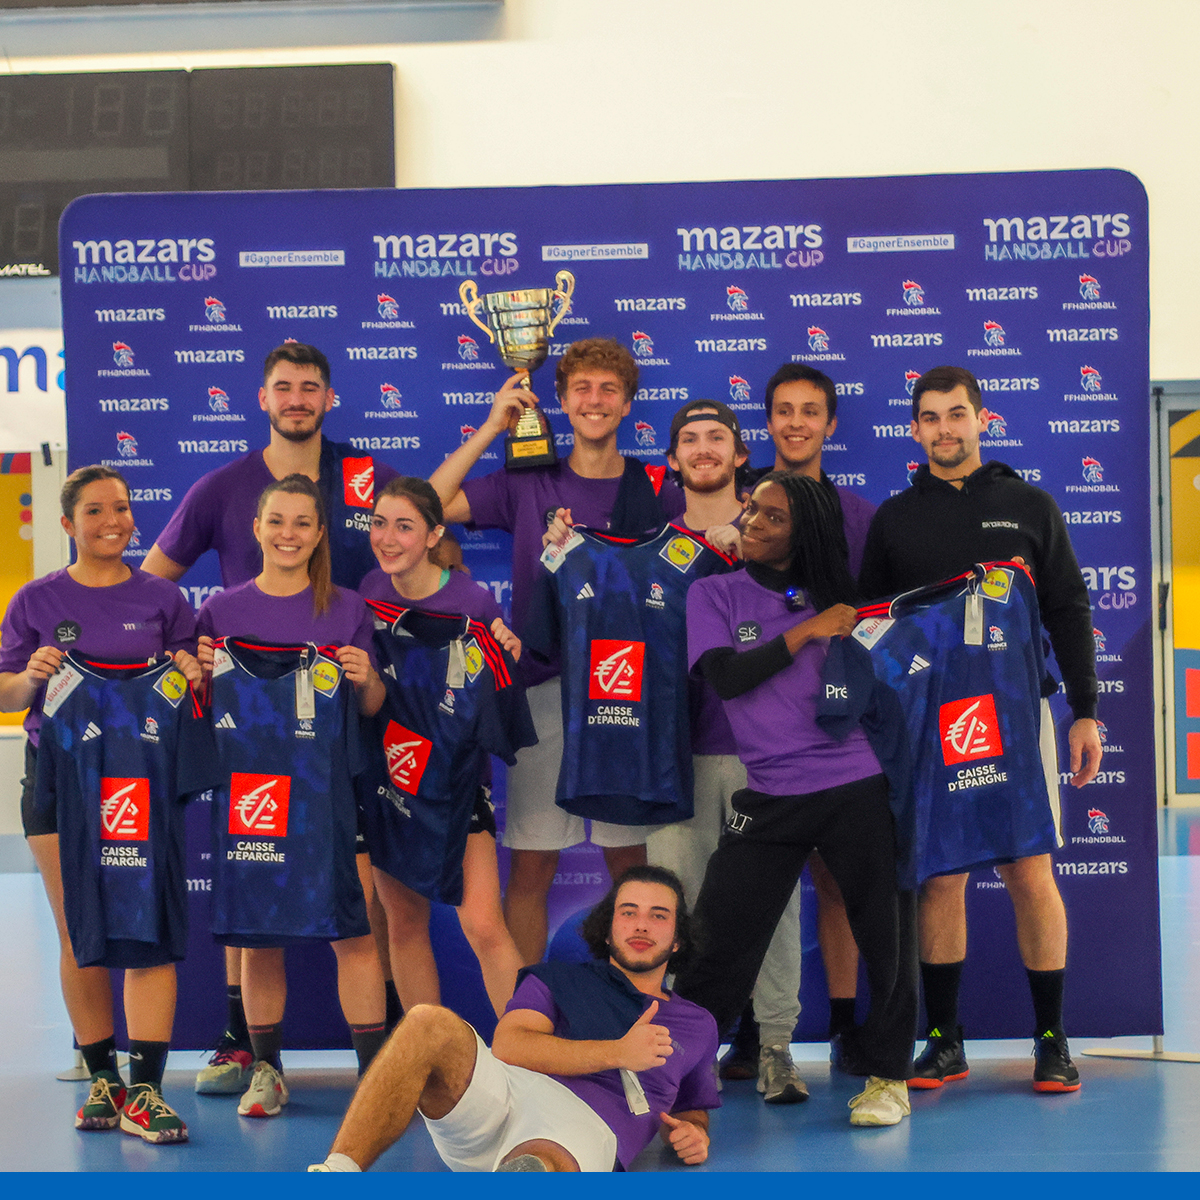 Vainqueur de la Mazars Handball Cup co-organisé par Mazars, Eventeam Ideas et la FFH